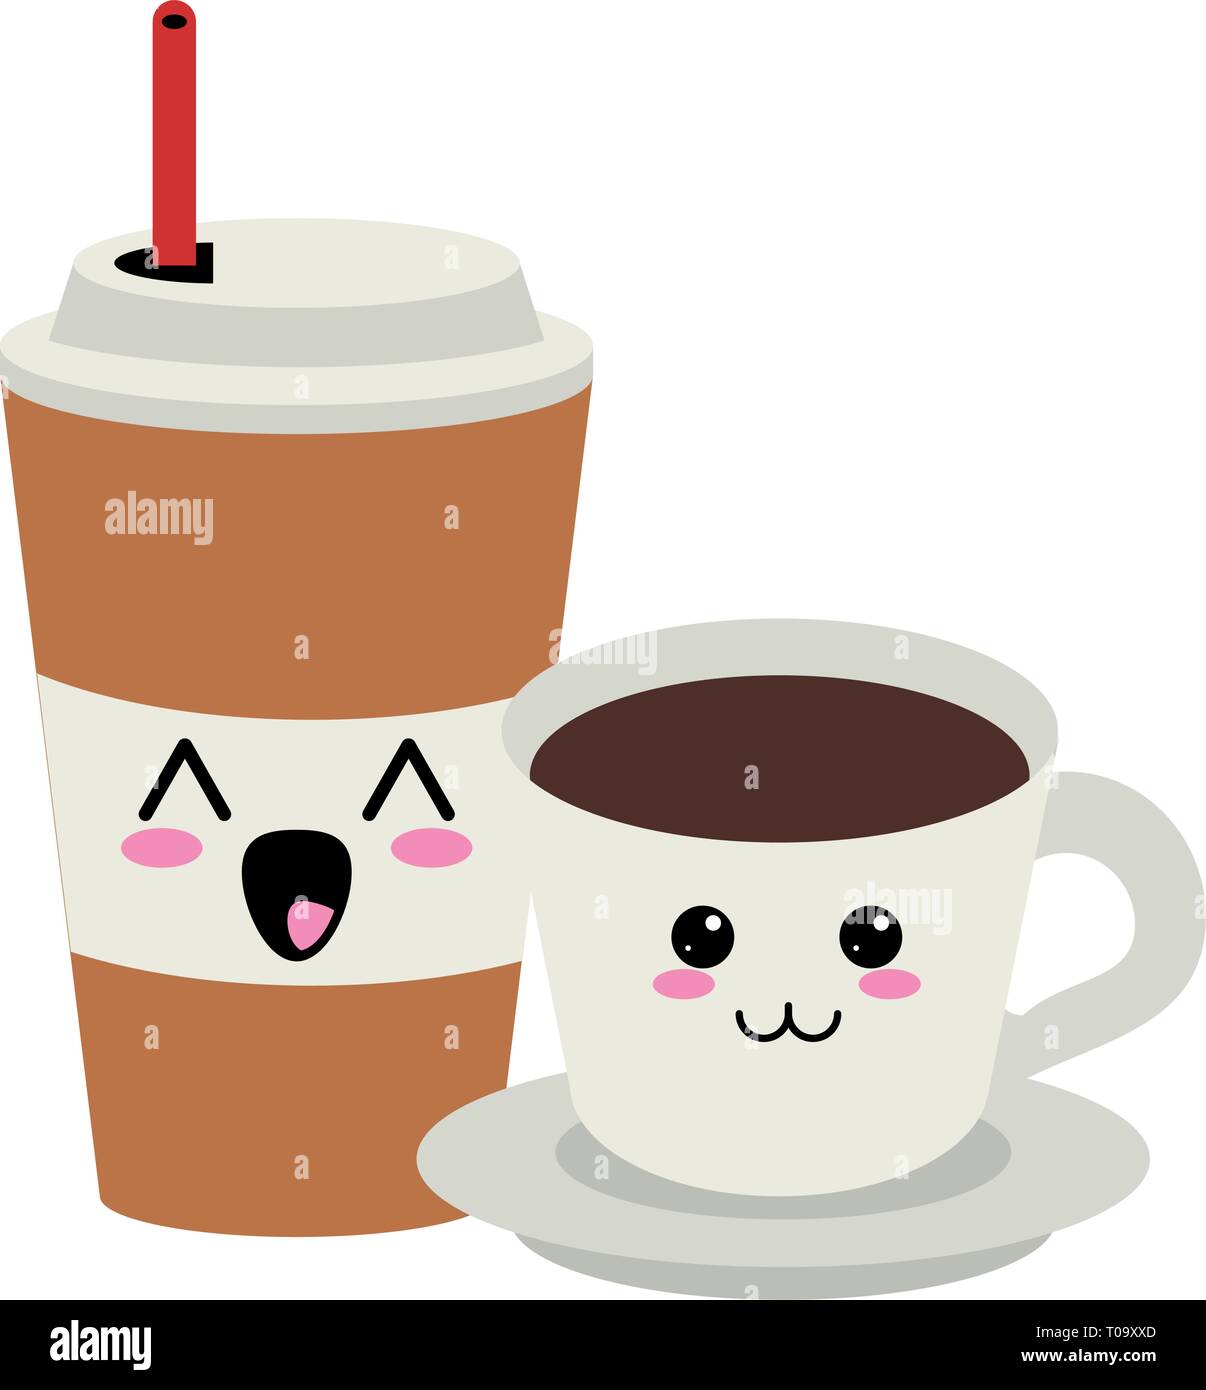 https://c8.alamy.com/comp/T09XXD/ice-coffee-cup-and-drink-hot-kawaii-cartoon-T09XXD.jpg